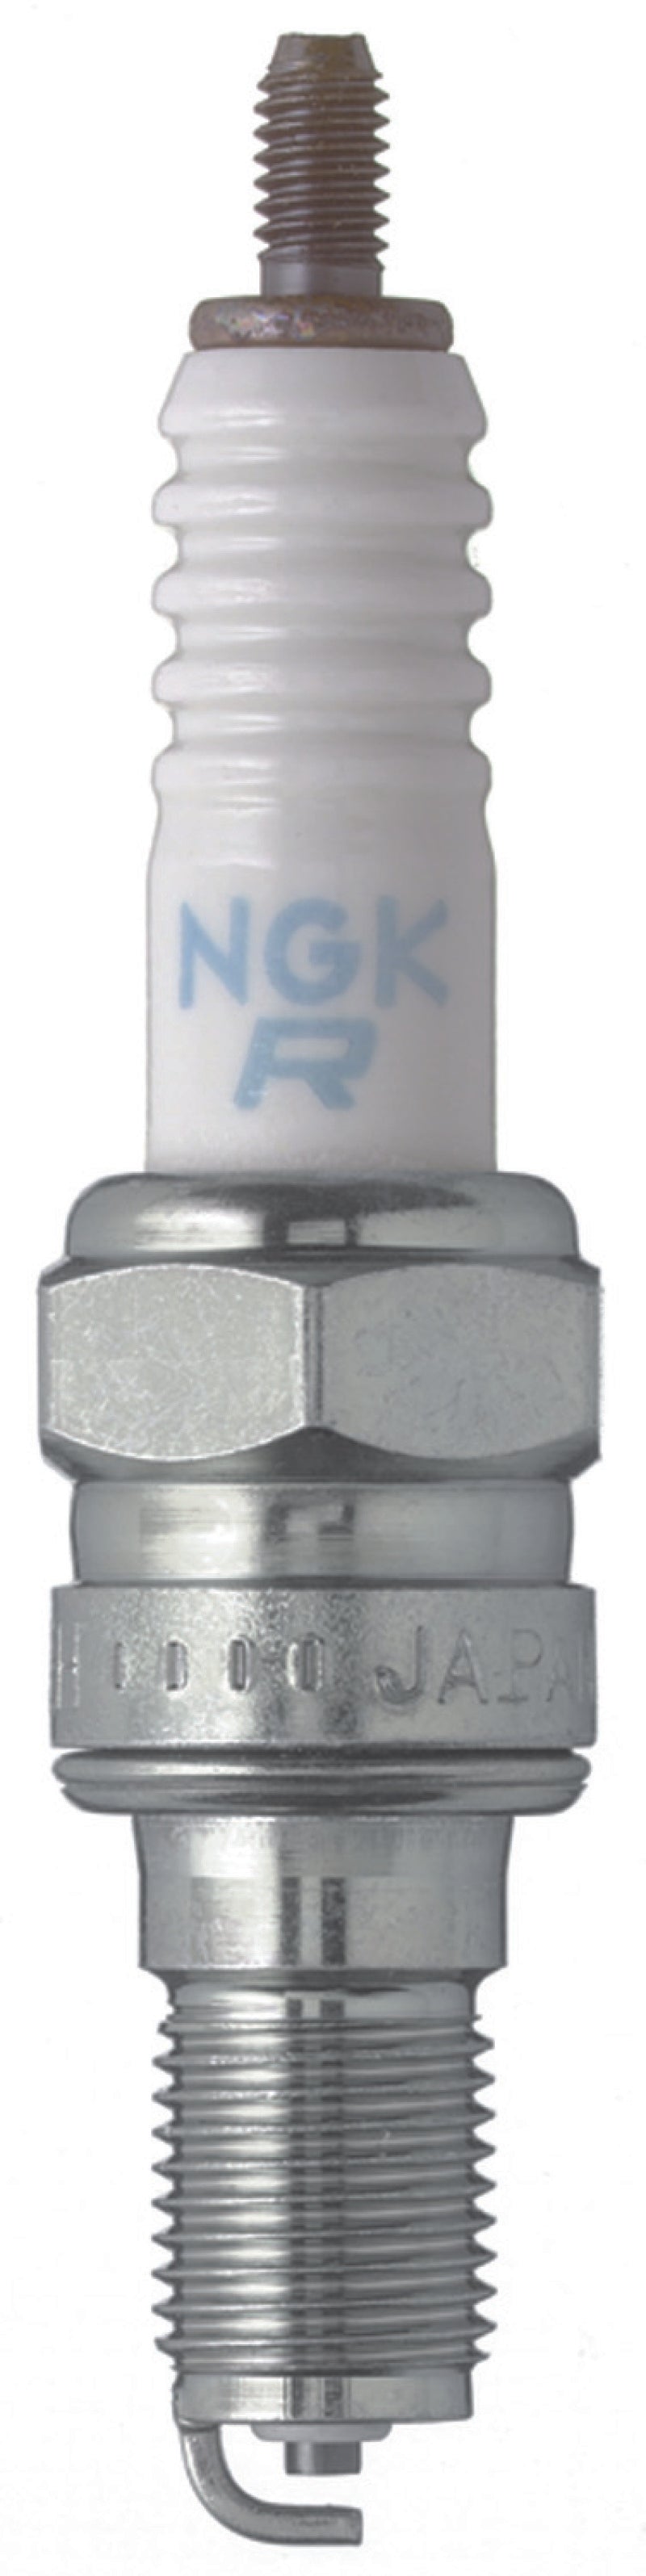 NGK Standard Spark Plug Box of 10 (CR9EH-9)